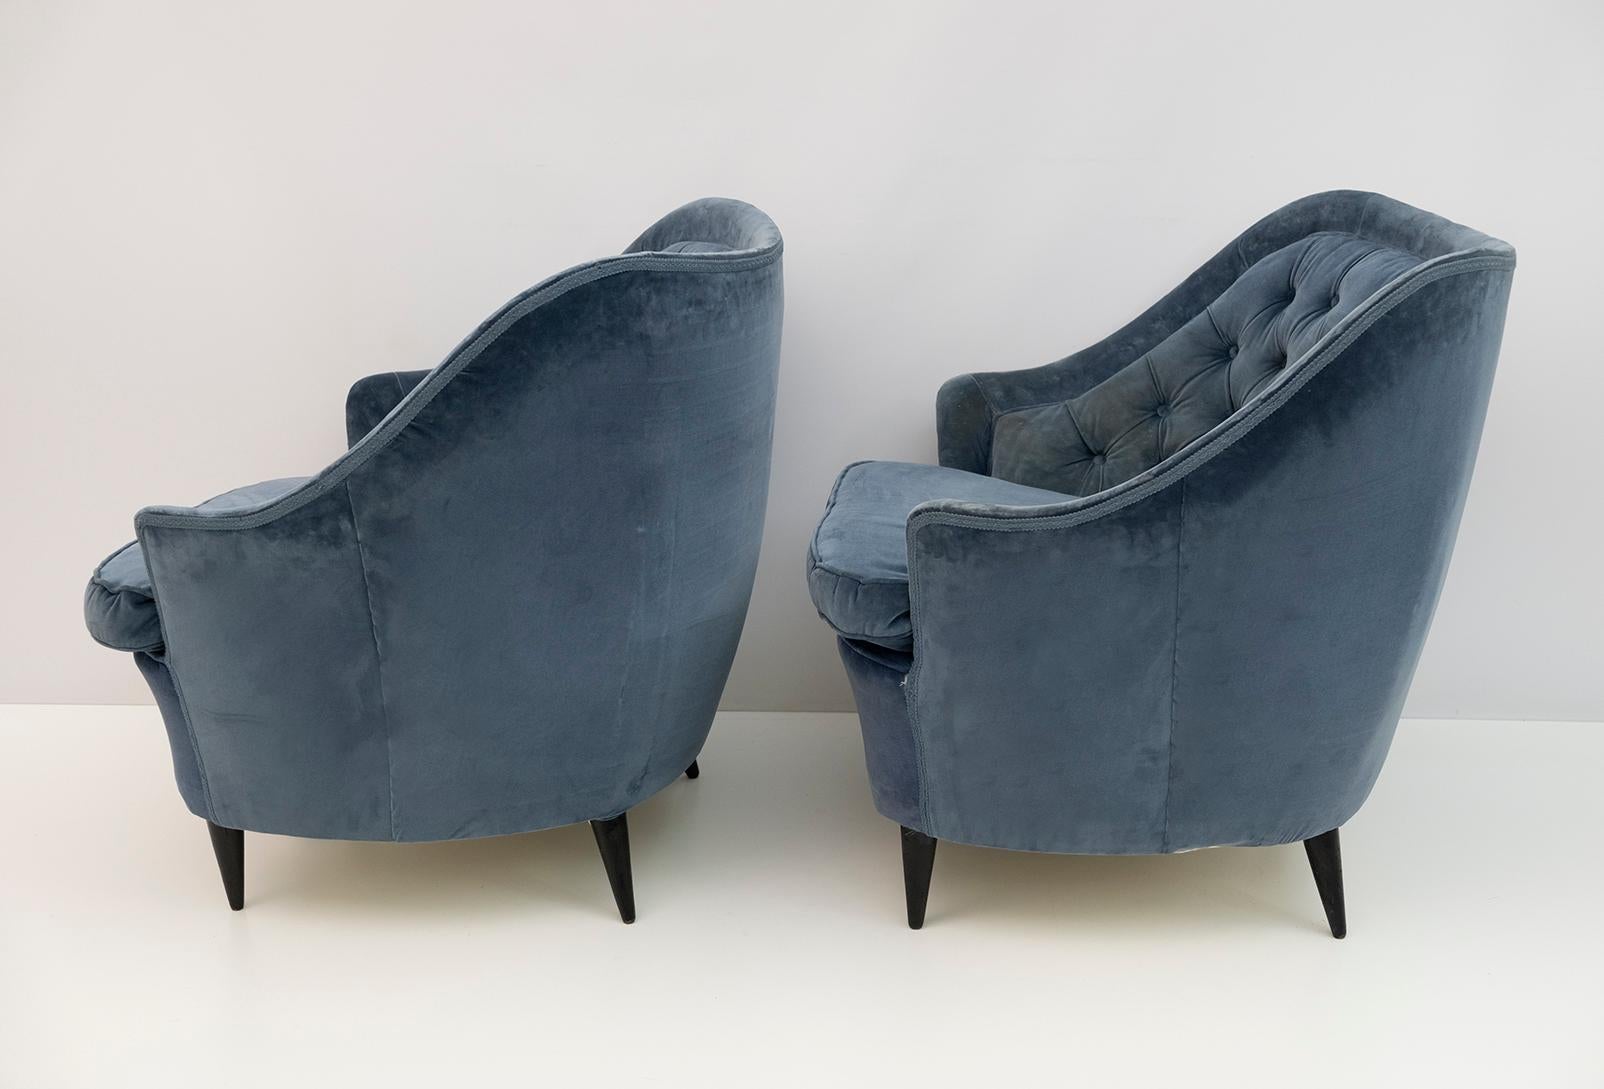 Velvet Gio Ponti Italian Pair of Curved Armchairs and Sofa for Casa E Giardino, 1930s